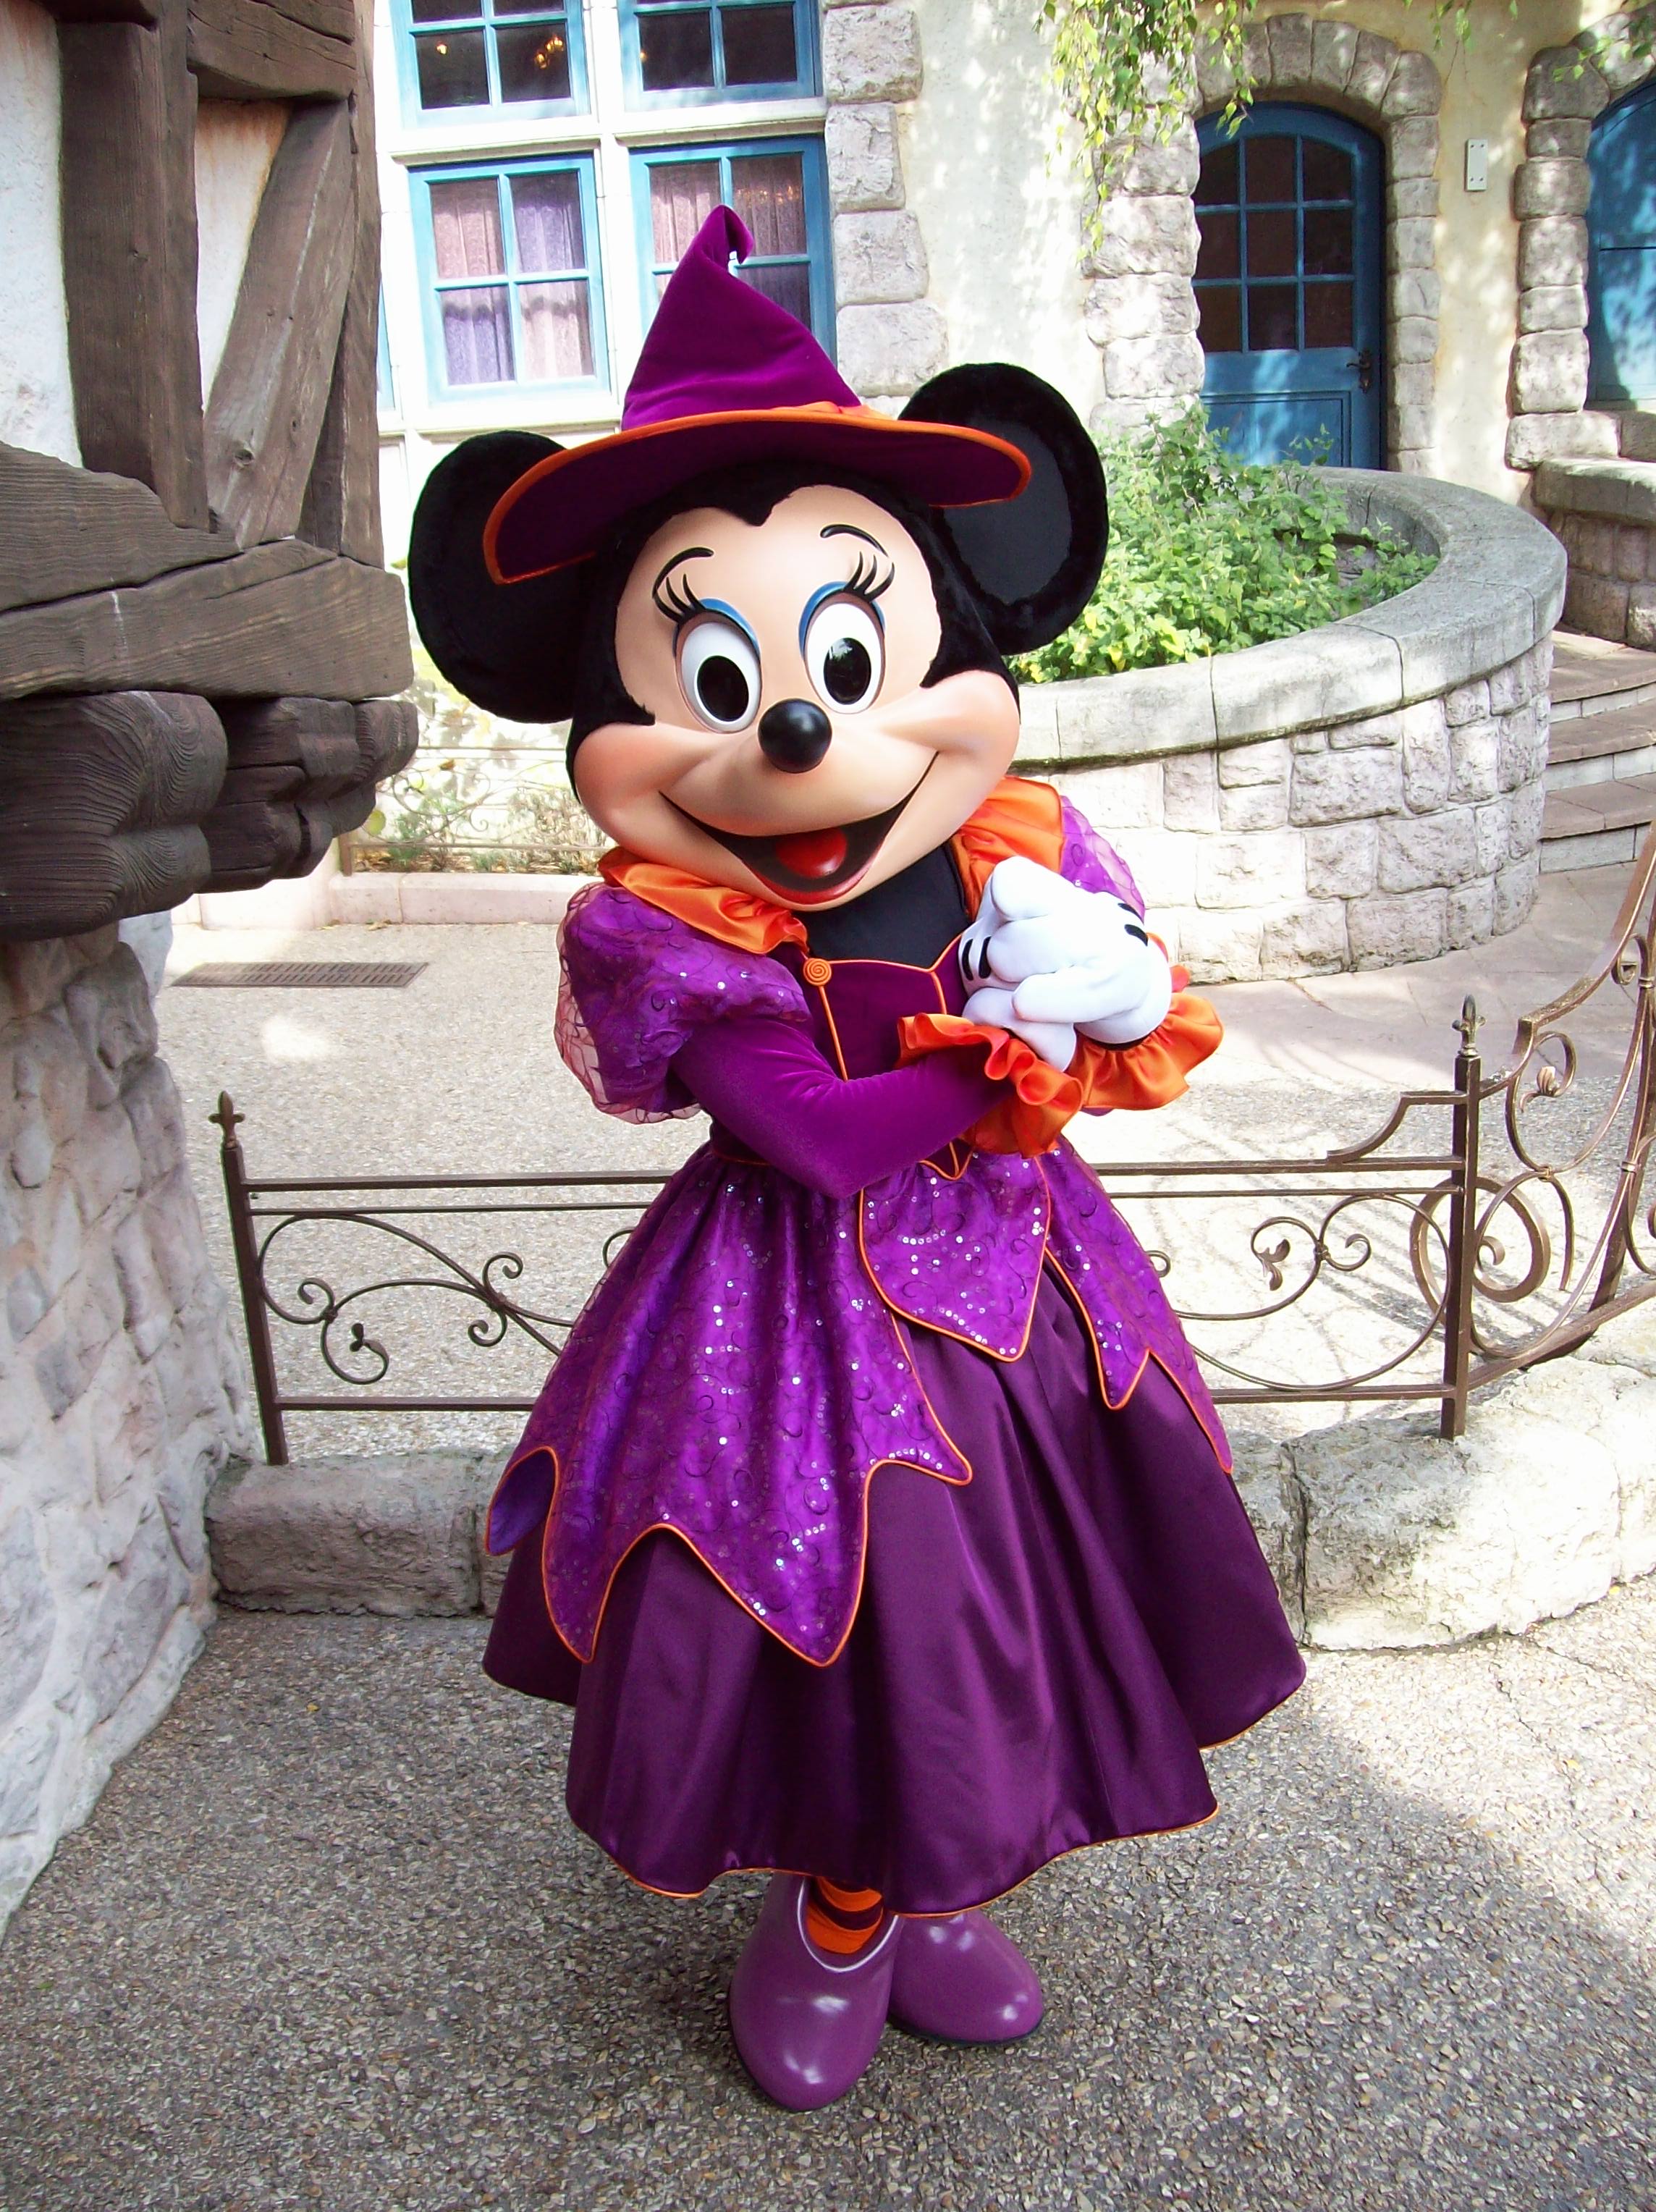 Minnie wearing her beautiful purple Halloween dress.